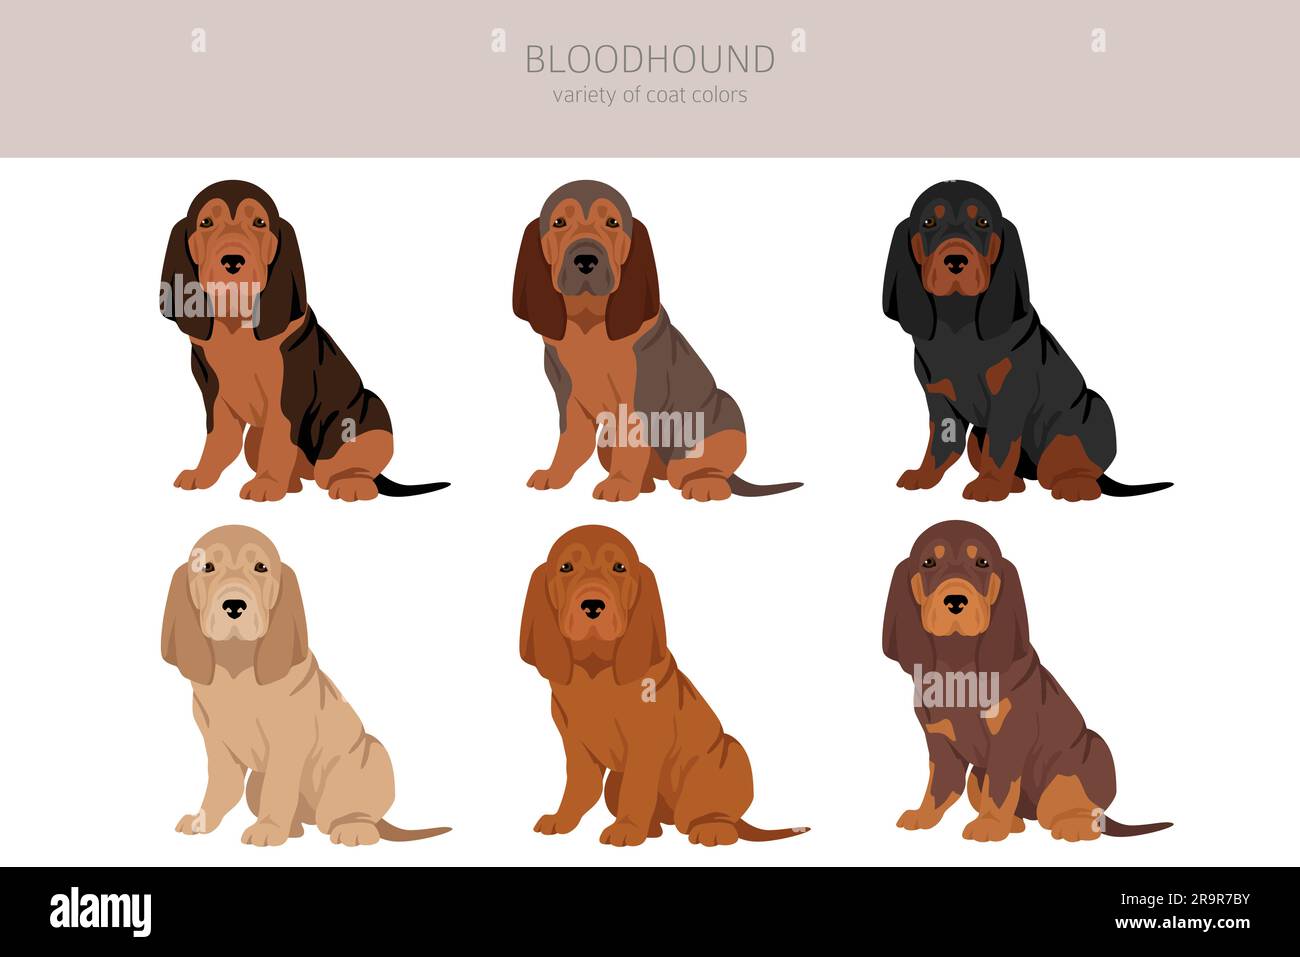 Bluthund-Welpen-Clipart. Alle Mantelfarben eingestellt. Andere Position. Infografik zu den Merkmalen aller Hunderassen. Vektordarstellung Stock Vektor